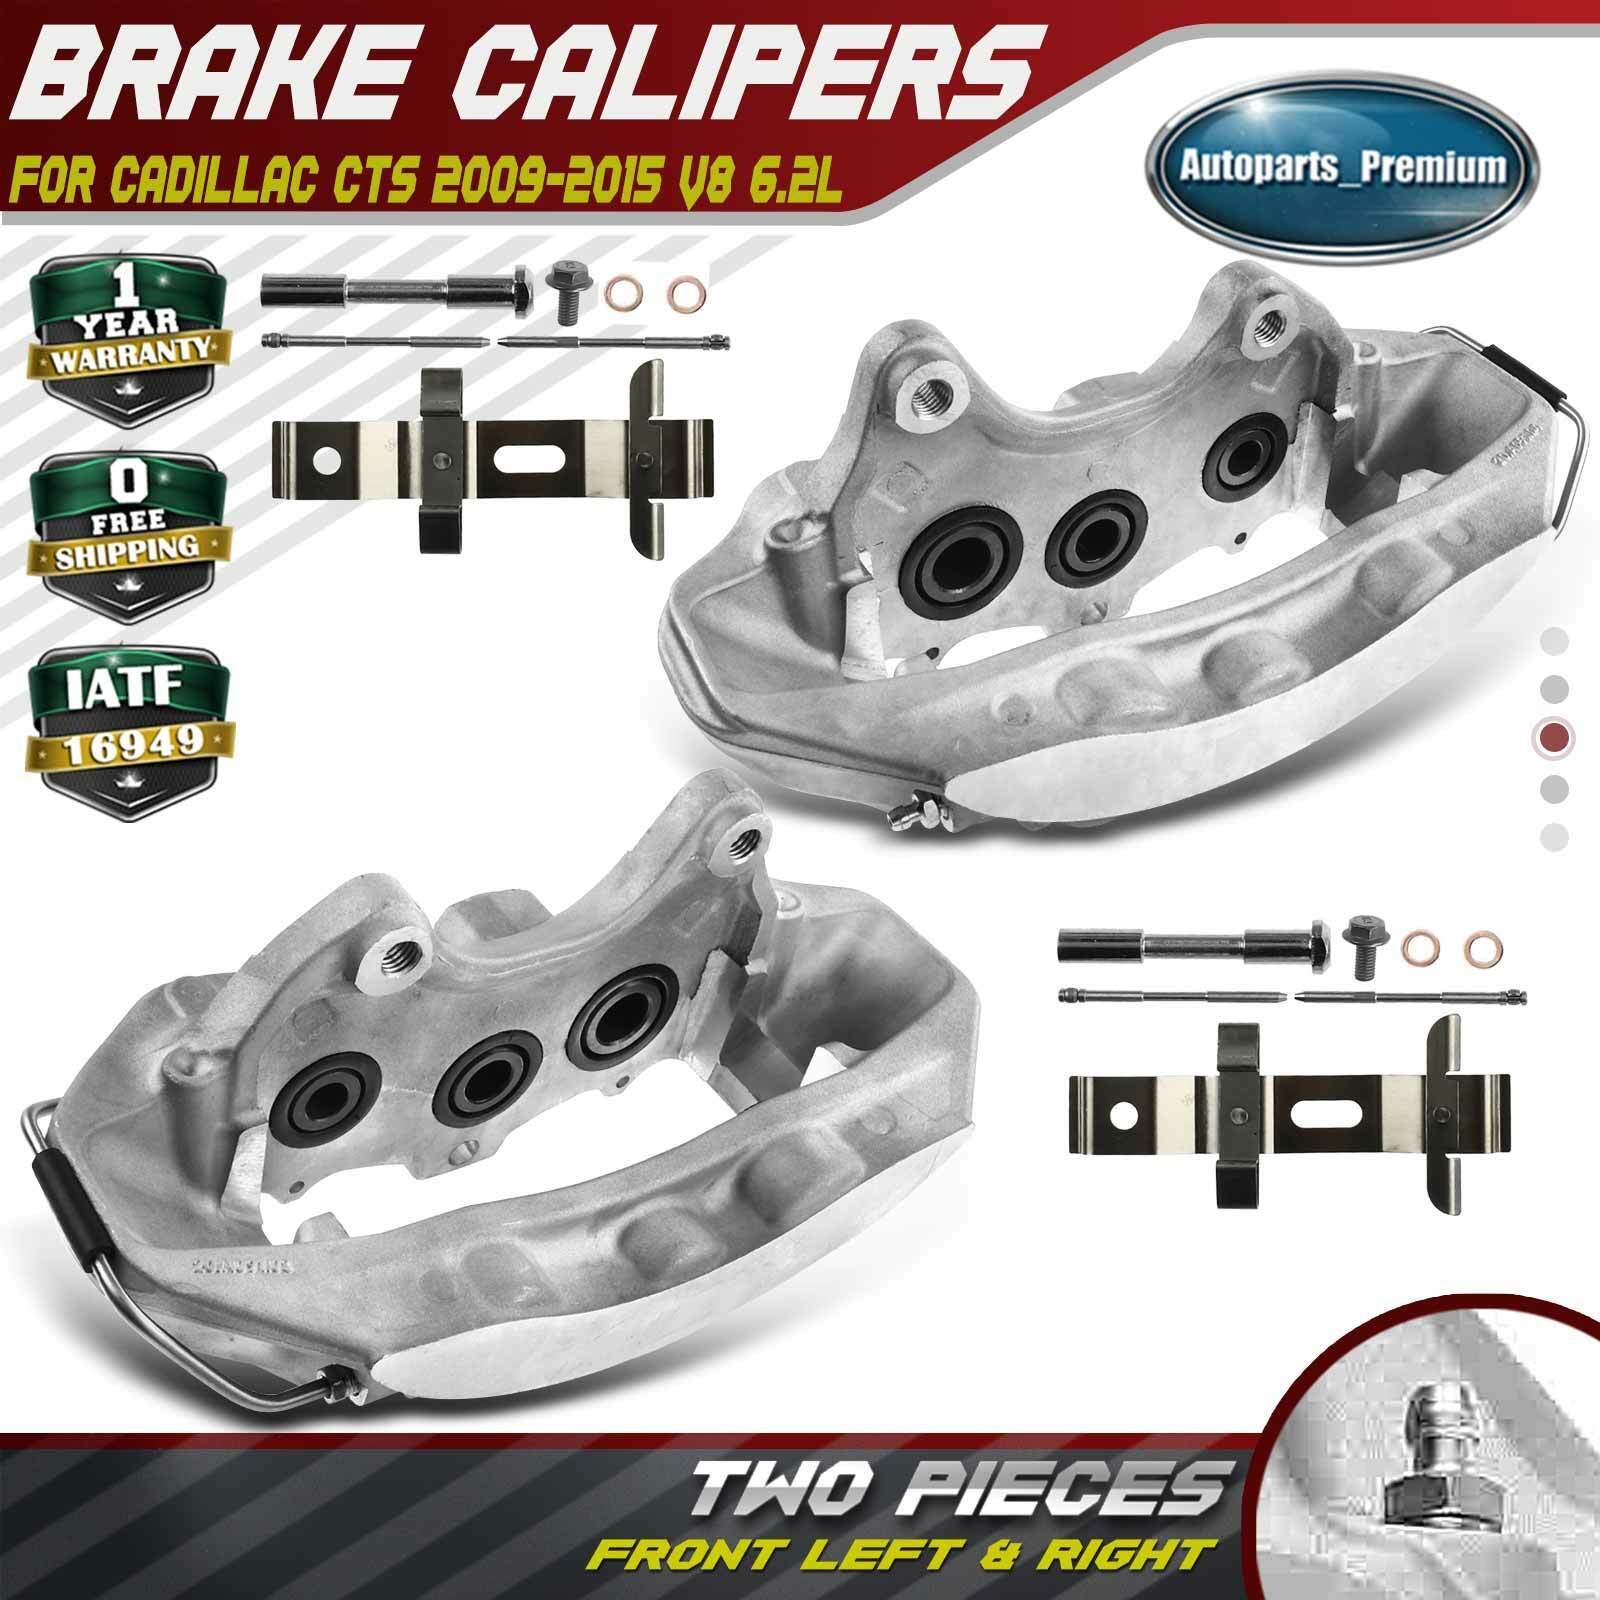 2x Disc Brake Caliper w/ 6 Piston for Cadillac CTS 2009-2015 V8 6.2L Front L & R